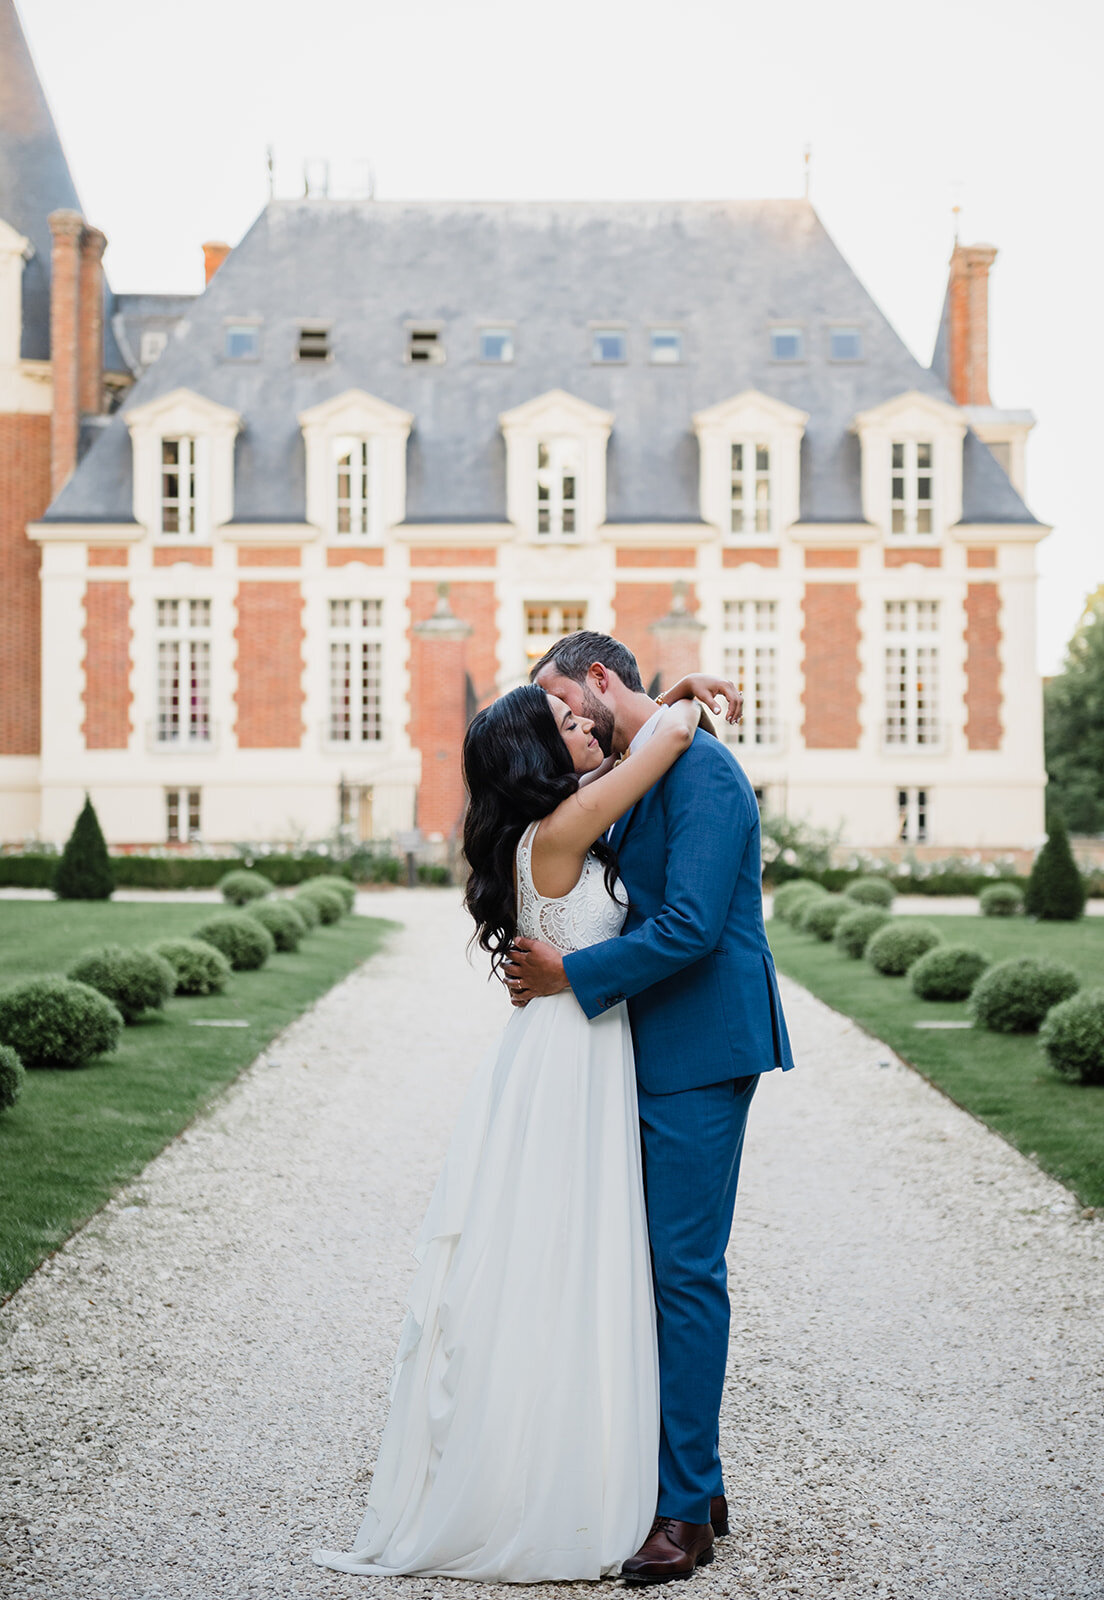 Photographe mariage chateau bonaventure